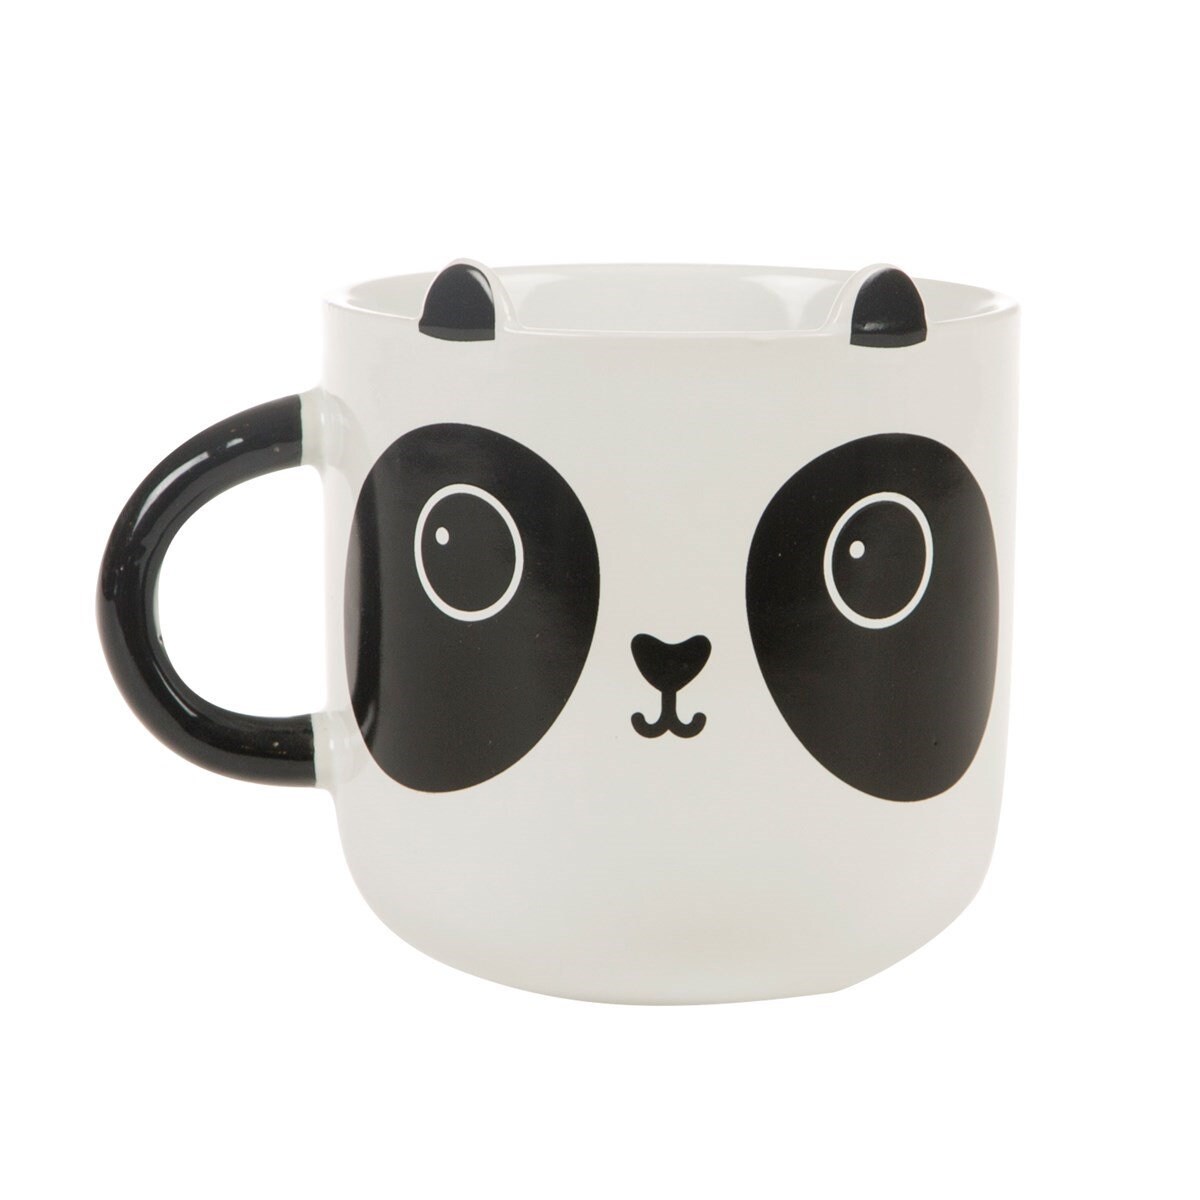 Adorable Hand-Painted Panda Mug with Lid - Perfect for Panda Lovers